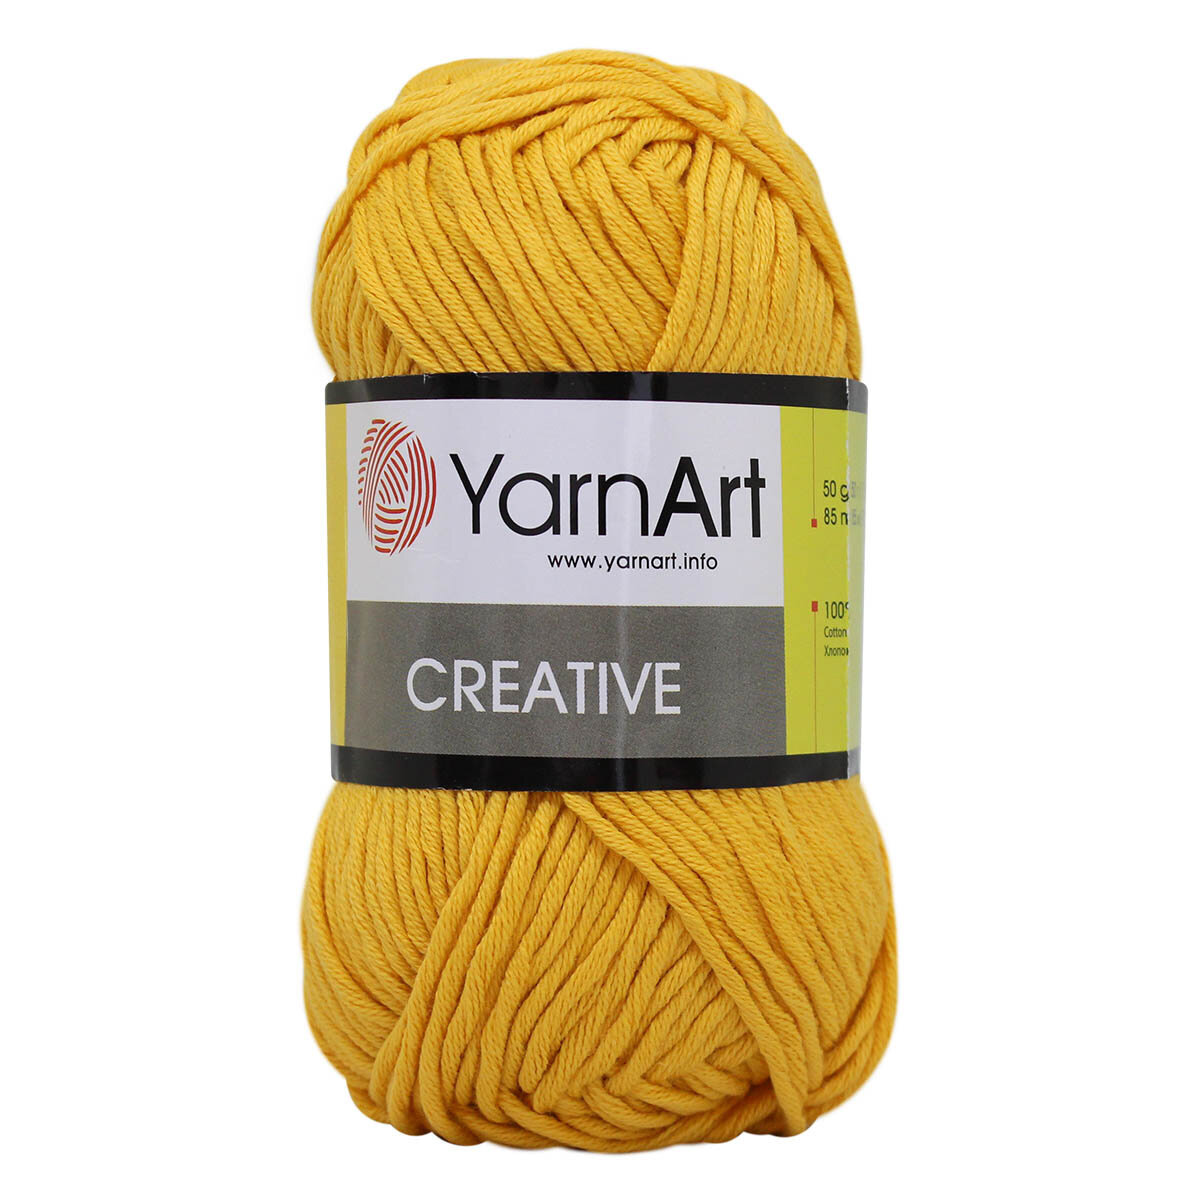 Пряжа YarnArt Creative 50г, 85м (ЯрнАрт Креатив) Нитки для вязания, 100% хлопок, цвет 228 желтый, 1шт